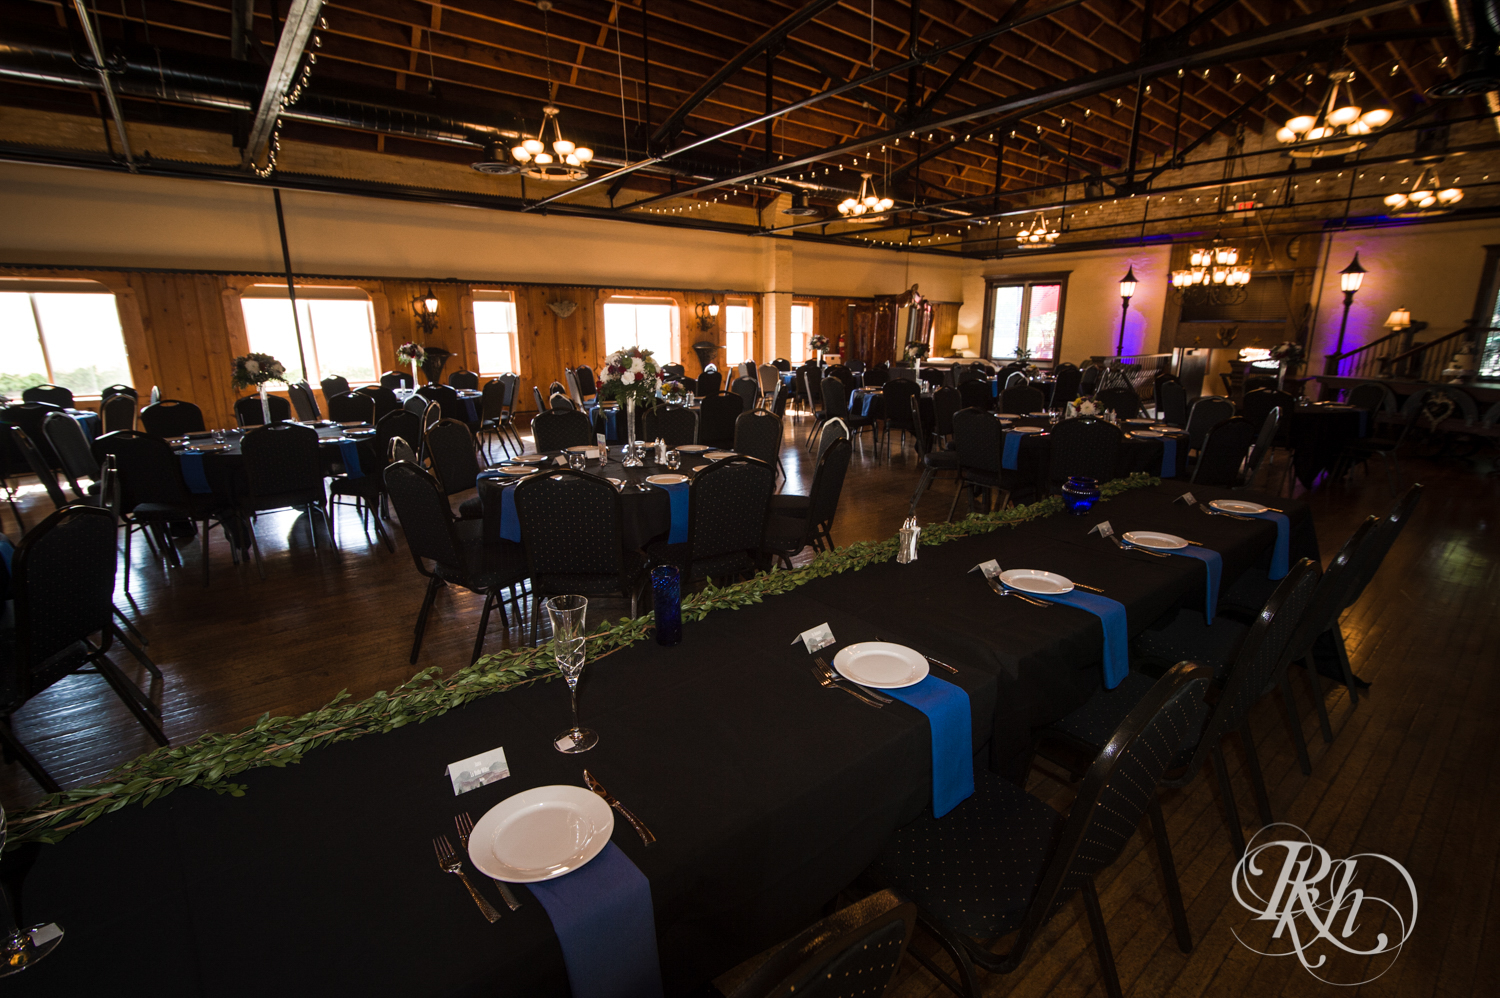 Indoor wedding reception at Kellerman's Event Center in White Bear Lake, Minnesota.